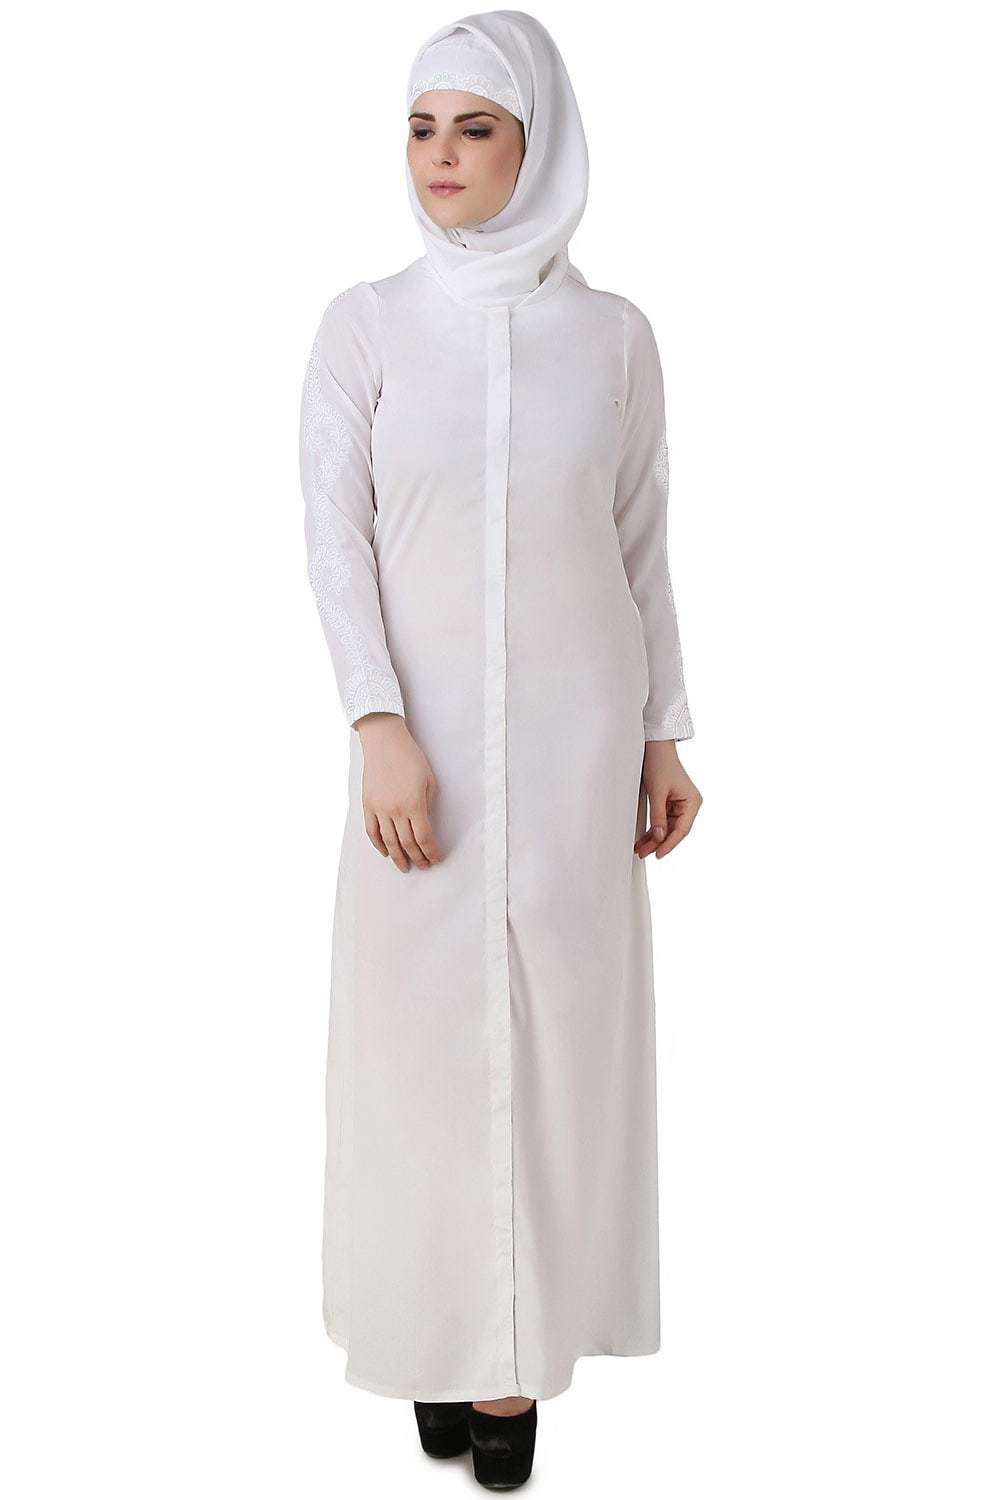 Huma White Front Open Cotton Abaya